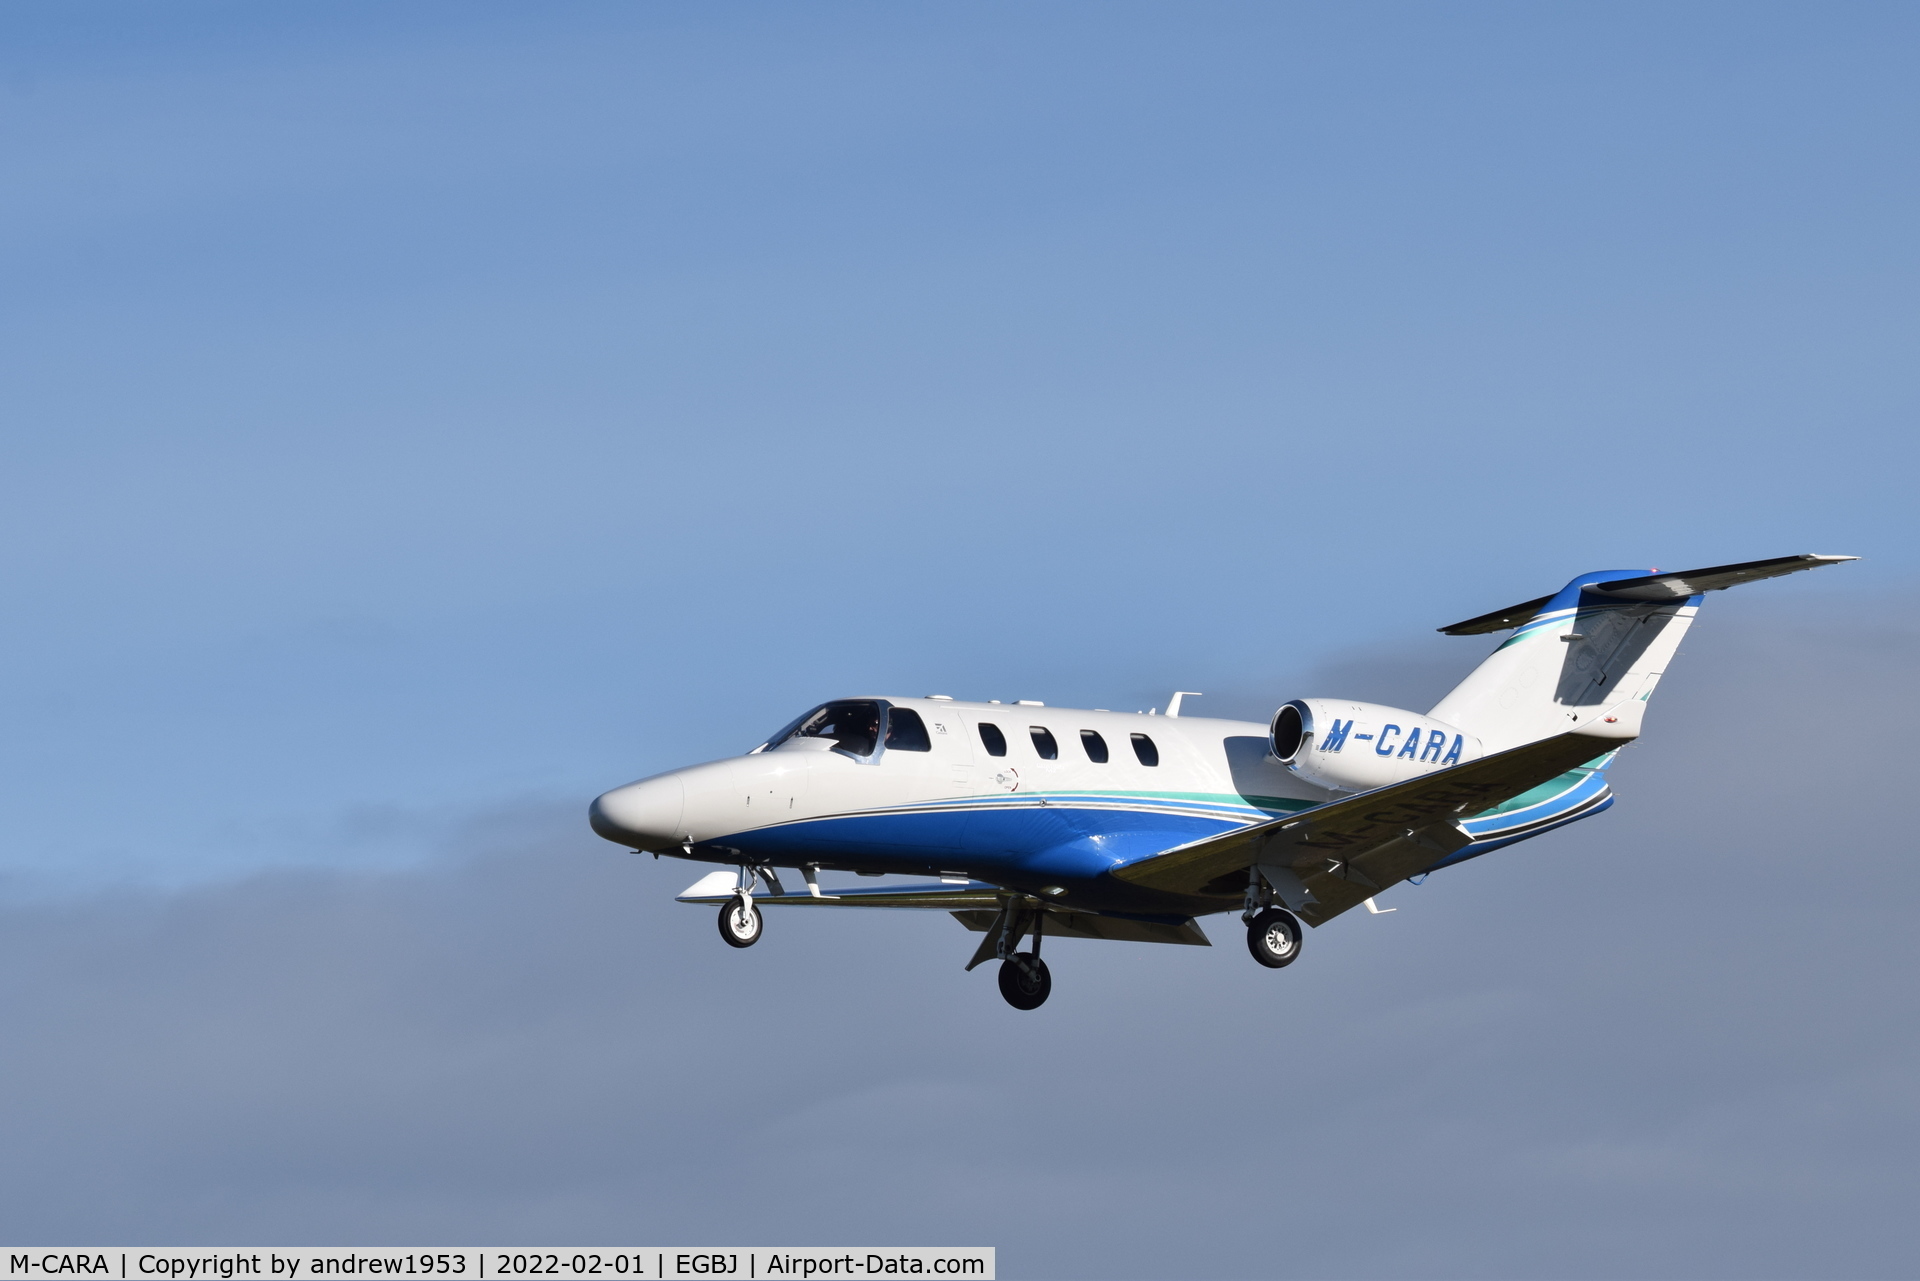 M-CARA, 2014 Cessna 525 Citation M2 C/N 525-0859, M-CARA at Gloucestershire Airport.